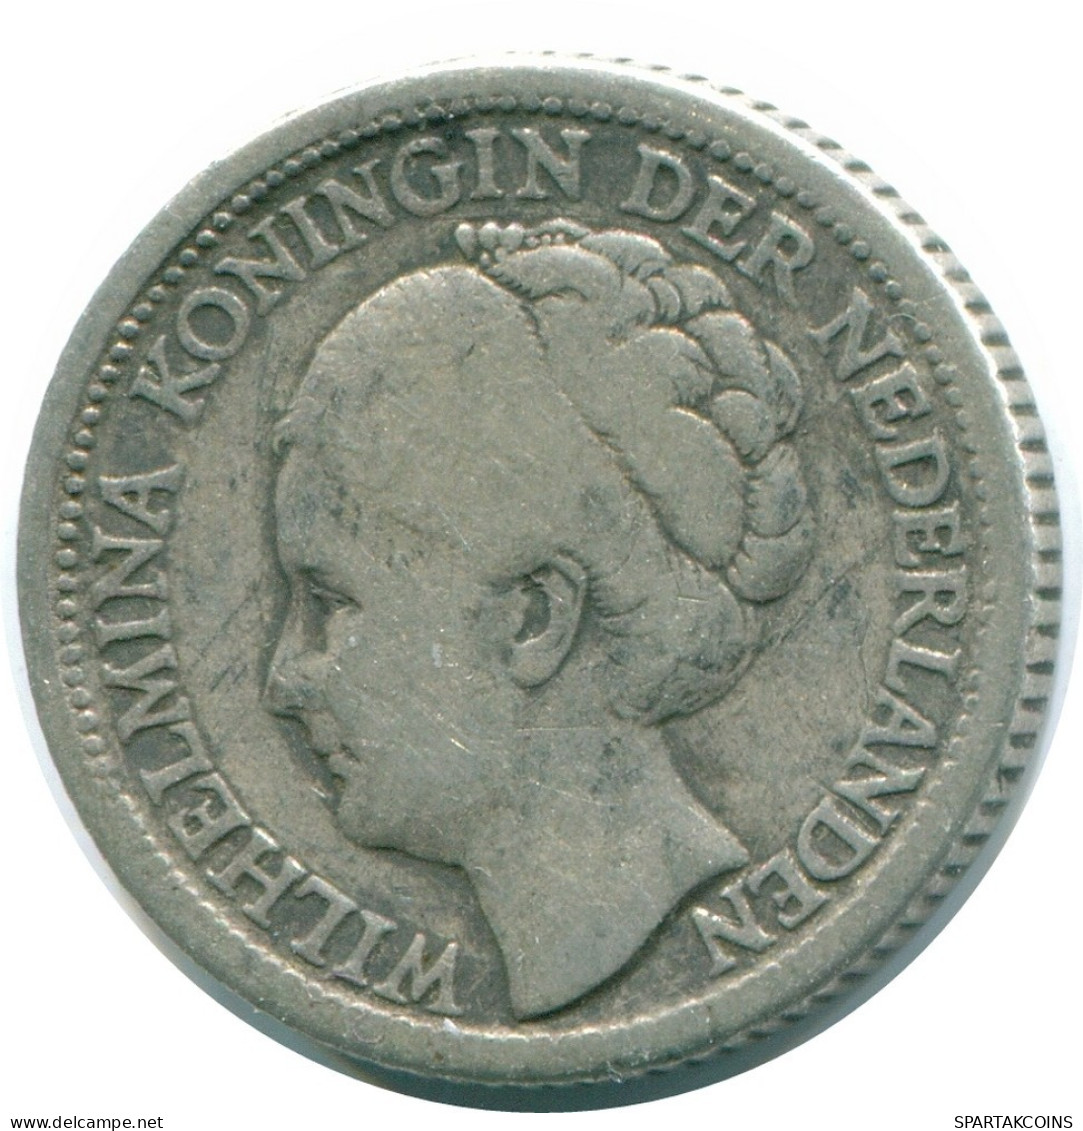 1/4 GULDEN 1944 CURACAO Netherlands SILVER Colonial Coin #NL10719.4.U.A - Curaçao